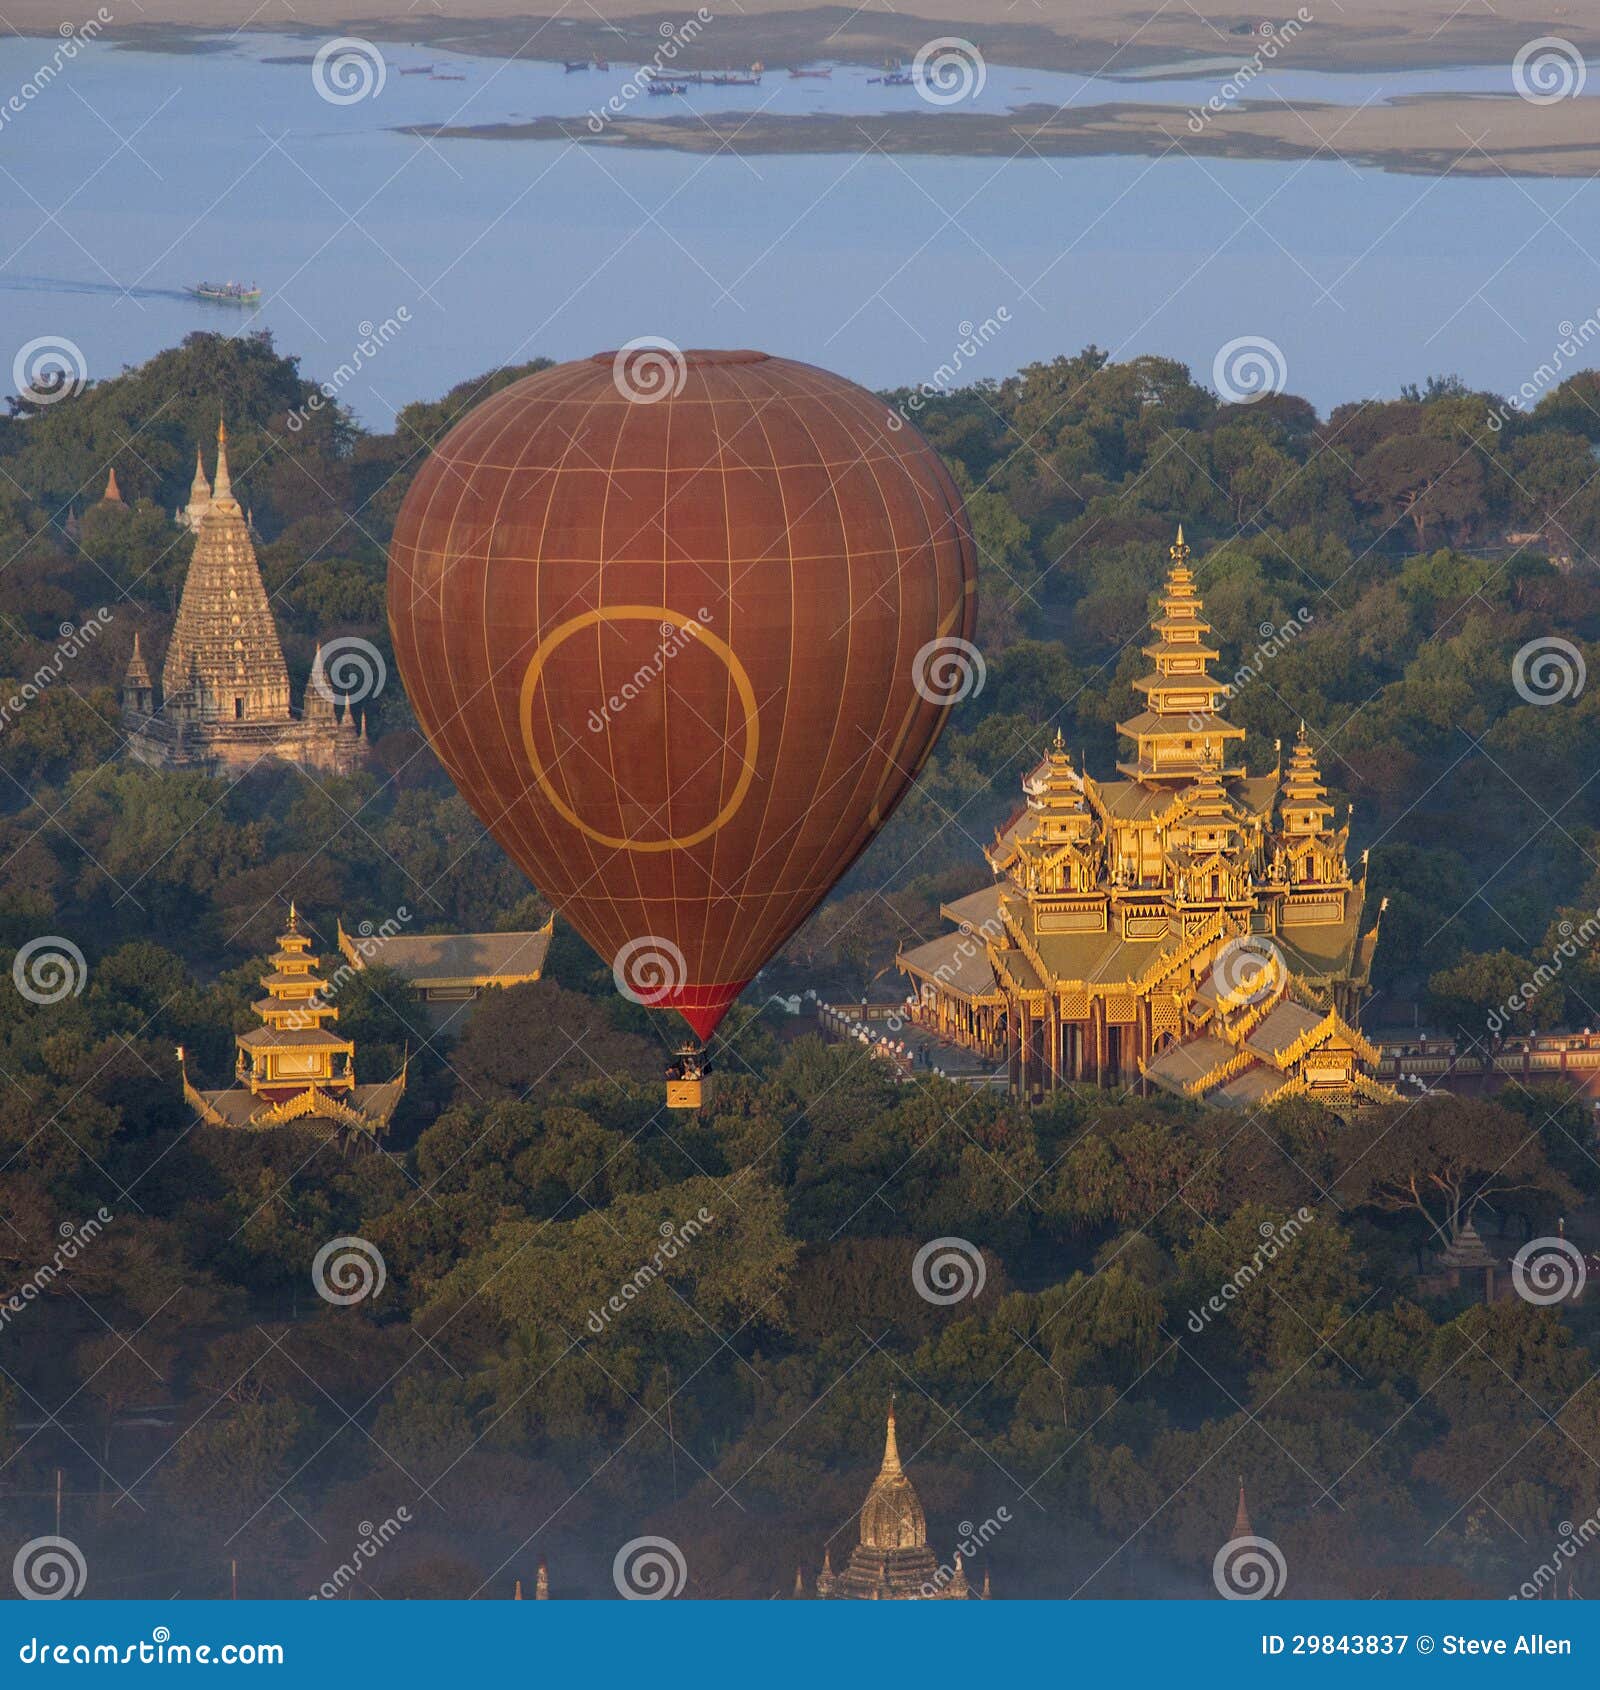 hot air balloon - bagan temples - myanmar (burma)